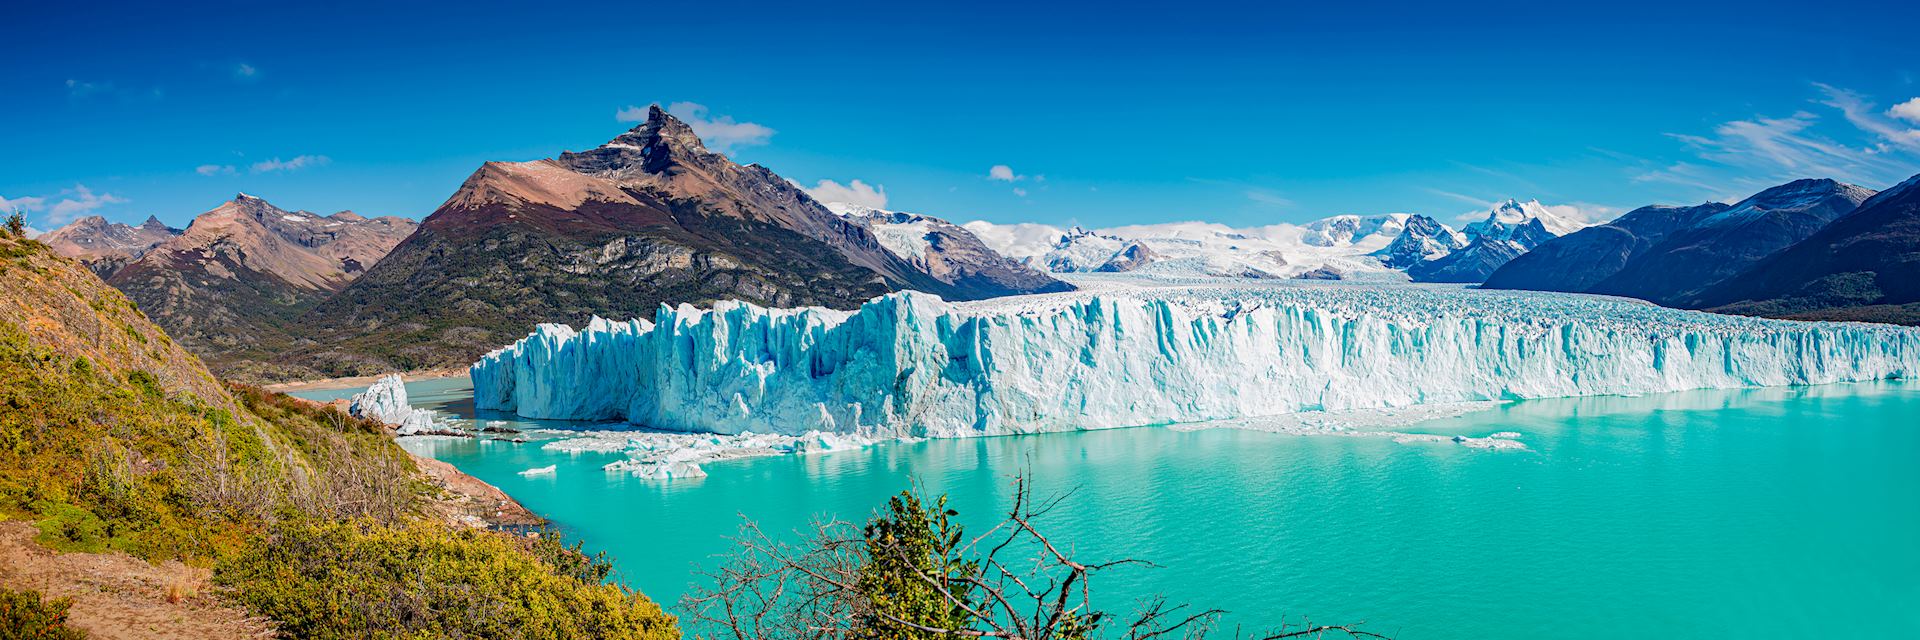 https://media.audleytravel.com/-/media/images/home/south-america/region-guides/patagonia-chile-v-argentina/perito_moreno_glacier_shutterstock_1493355977_3000x1000.jpg?q=79&w=1920&h=640